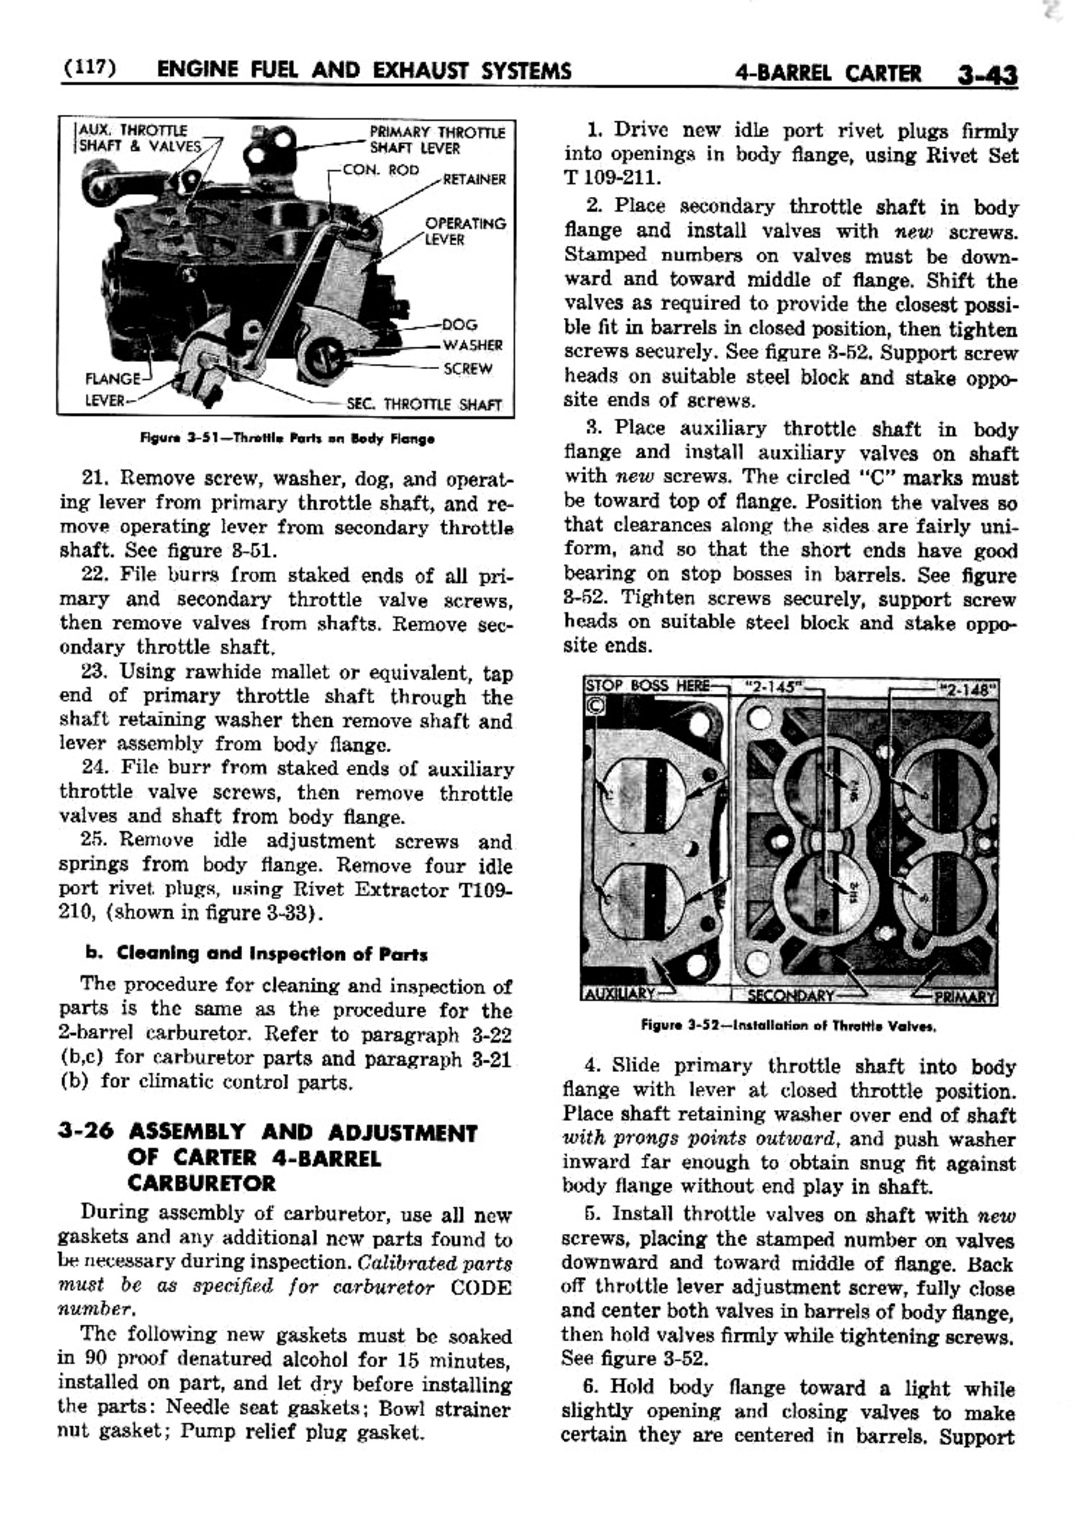 n_04 1952 Buick Shop Manual - Engine Fuel & Exhaust-043-043.jpg